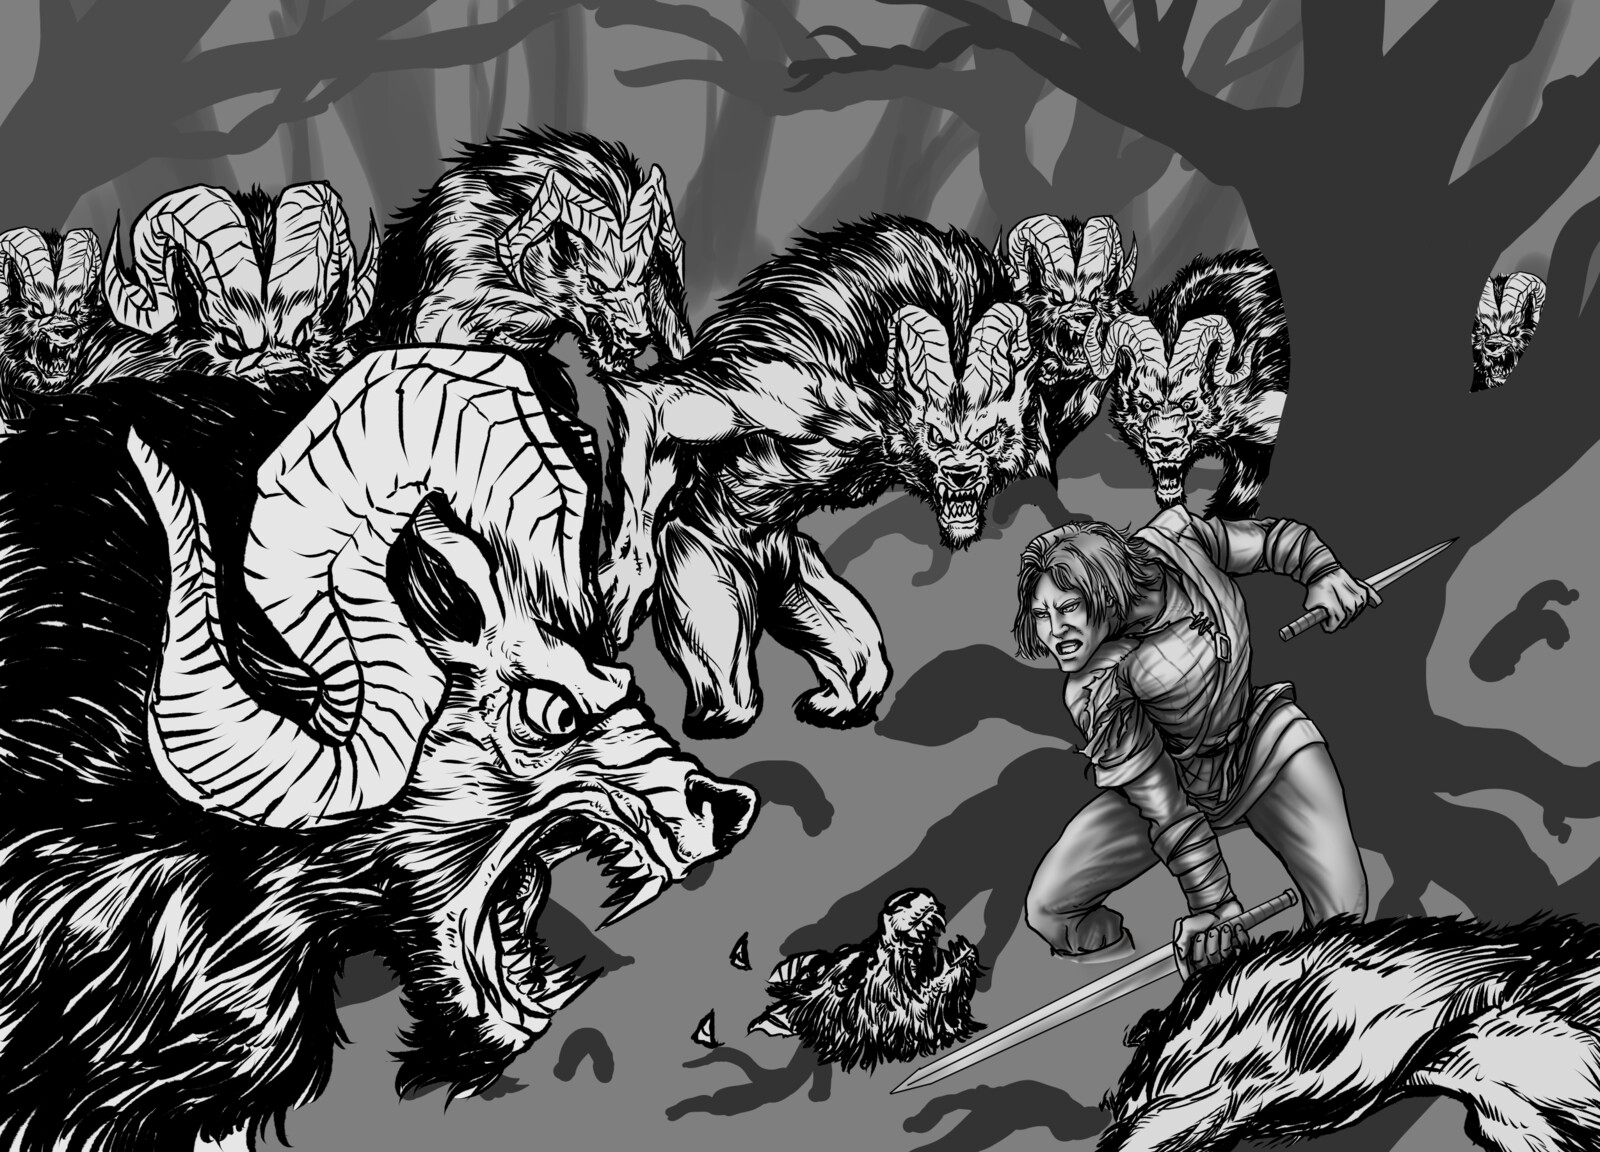 04 - Painting the werewolfs